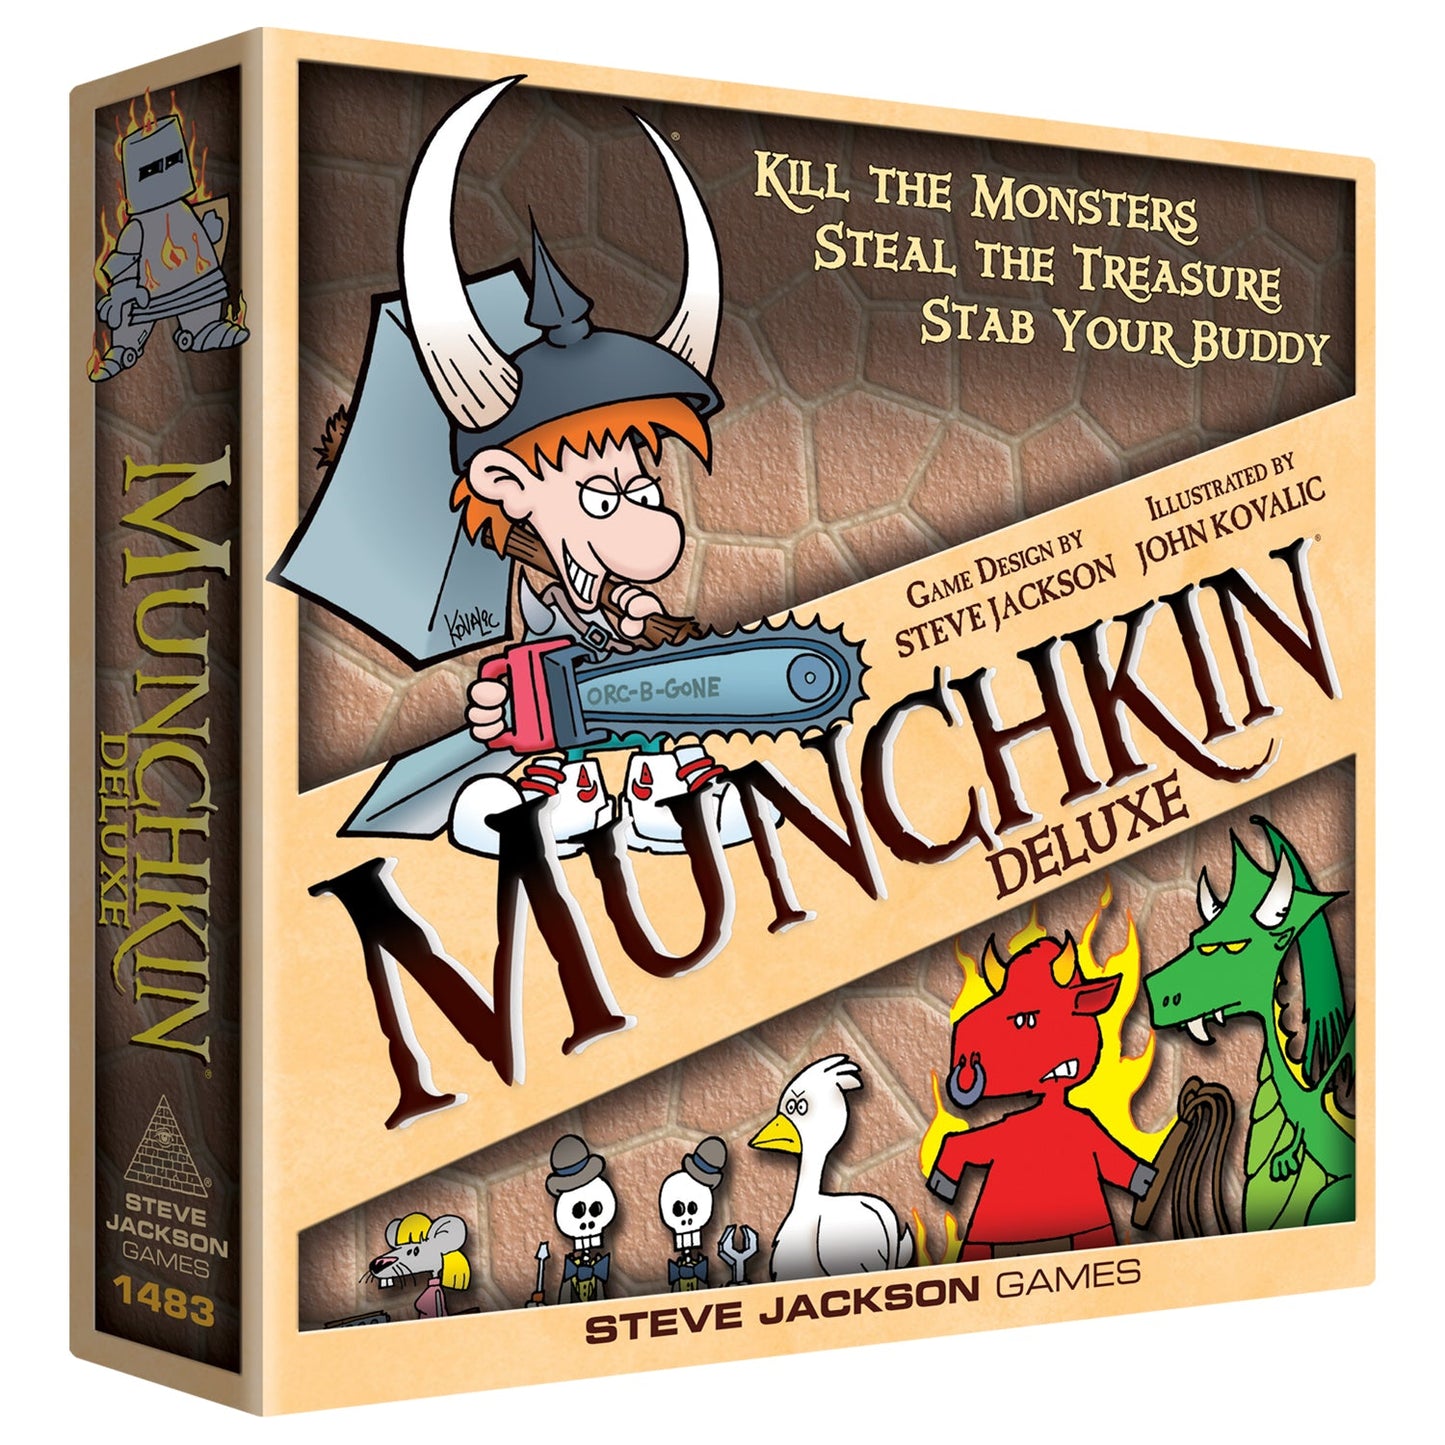 Munchkin Deluxe Card Games Steve Jackson Games 